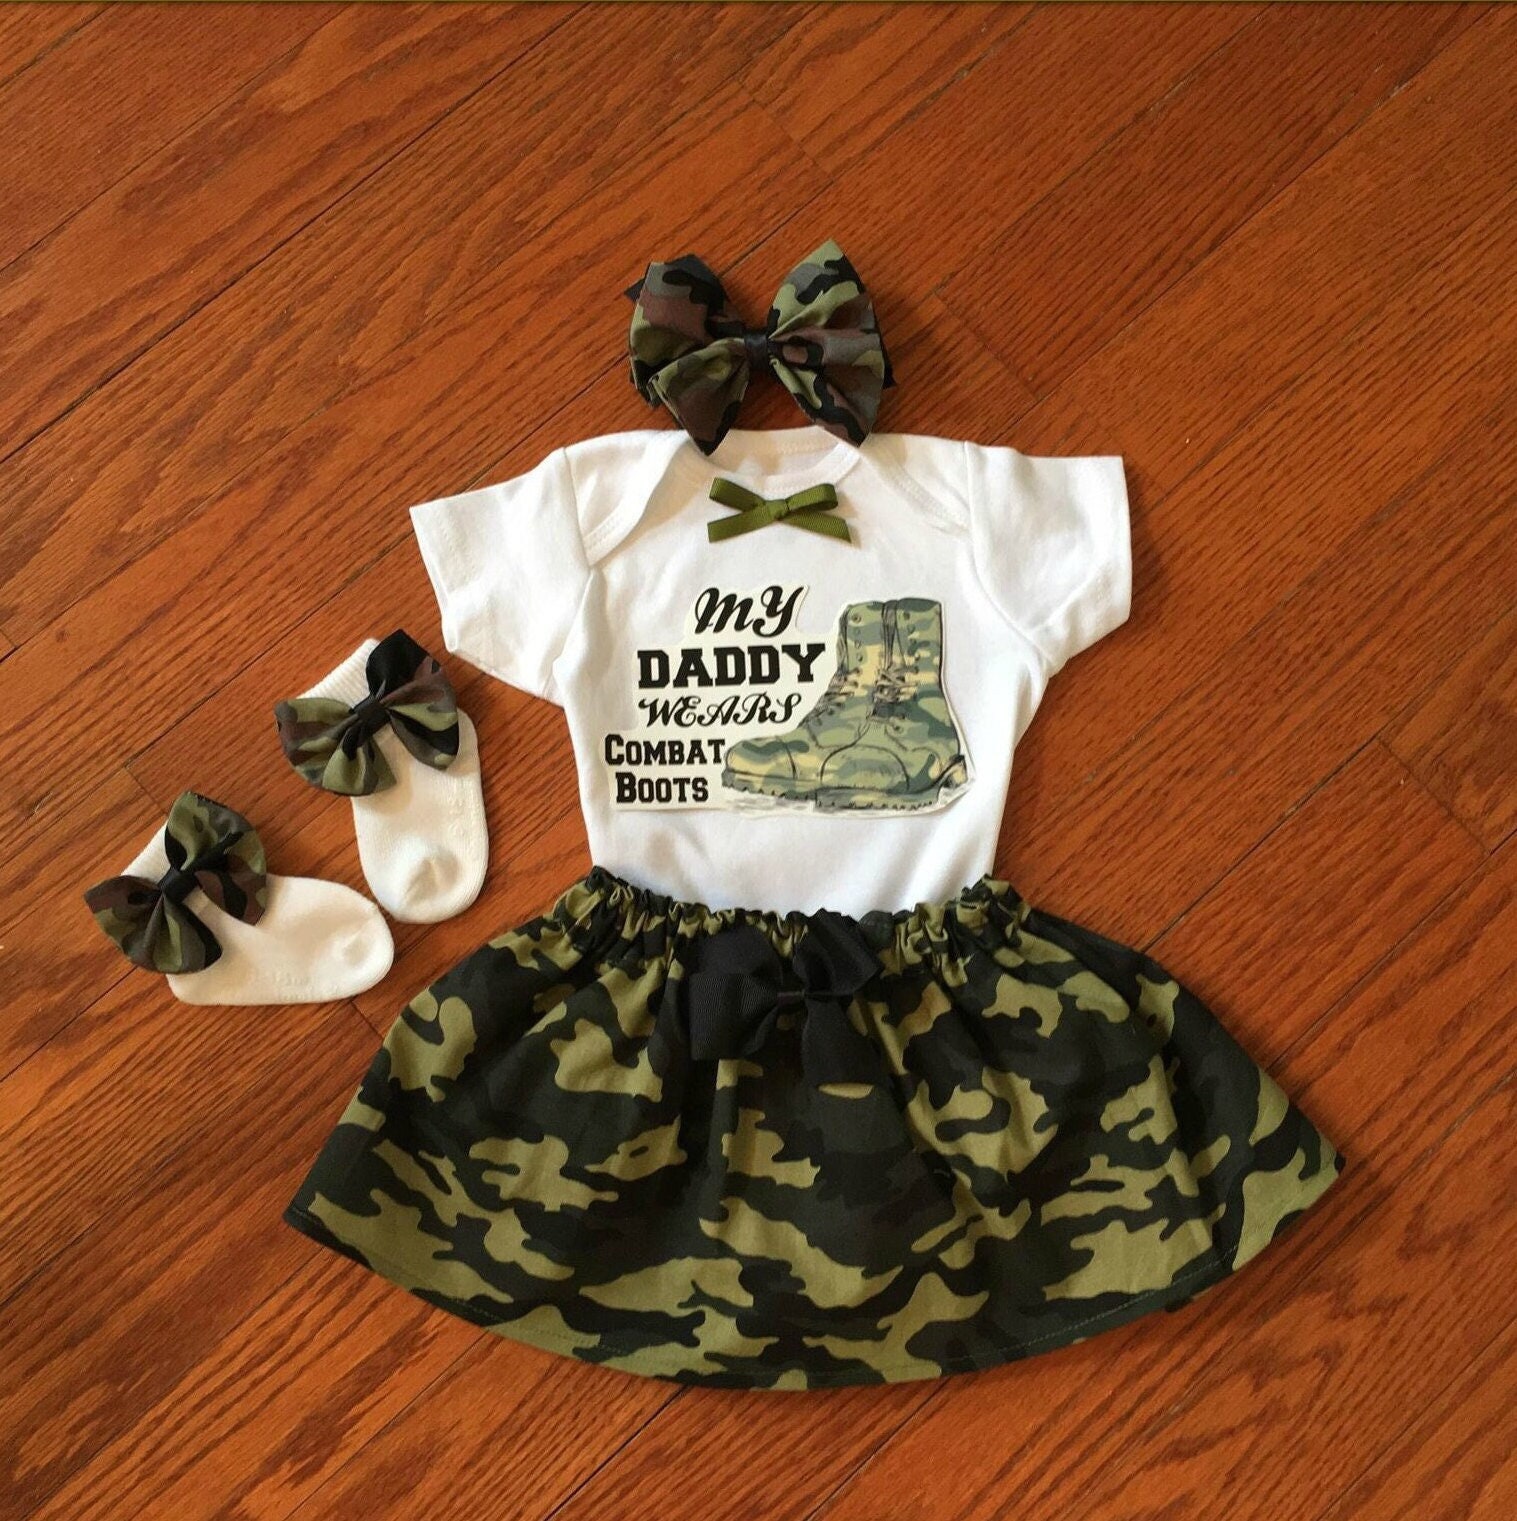 BTS (방탄소년단) Baby Army Bodysuit